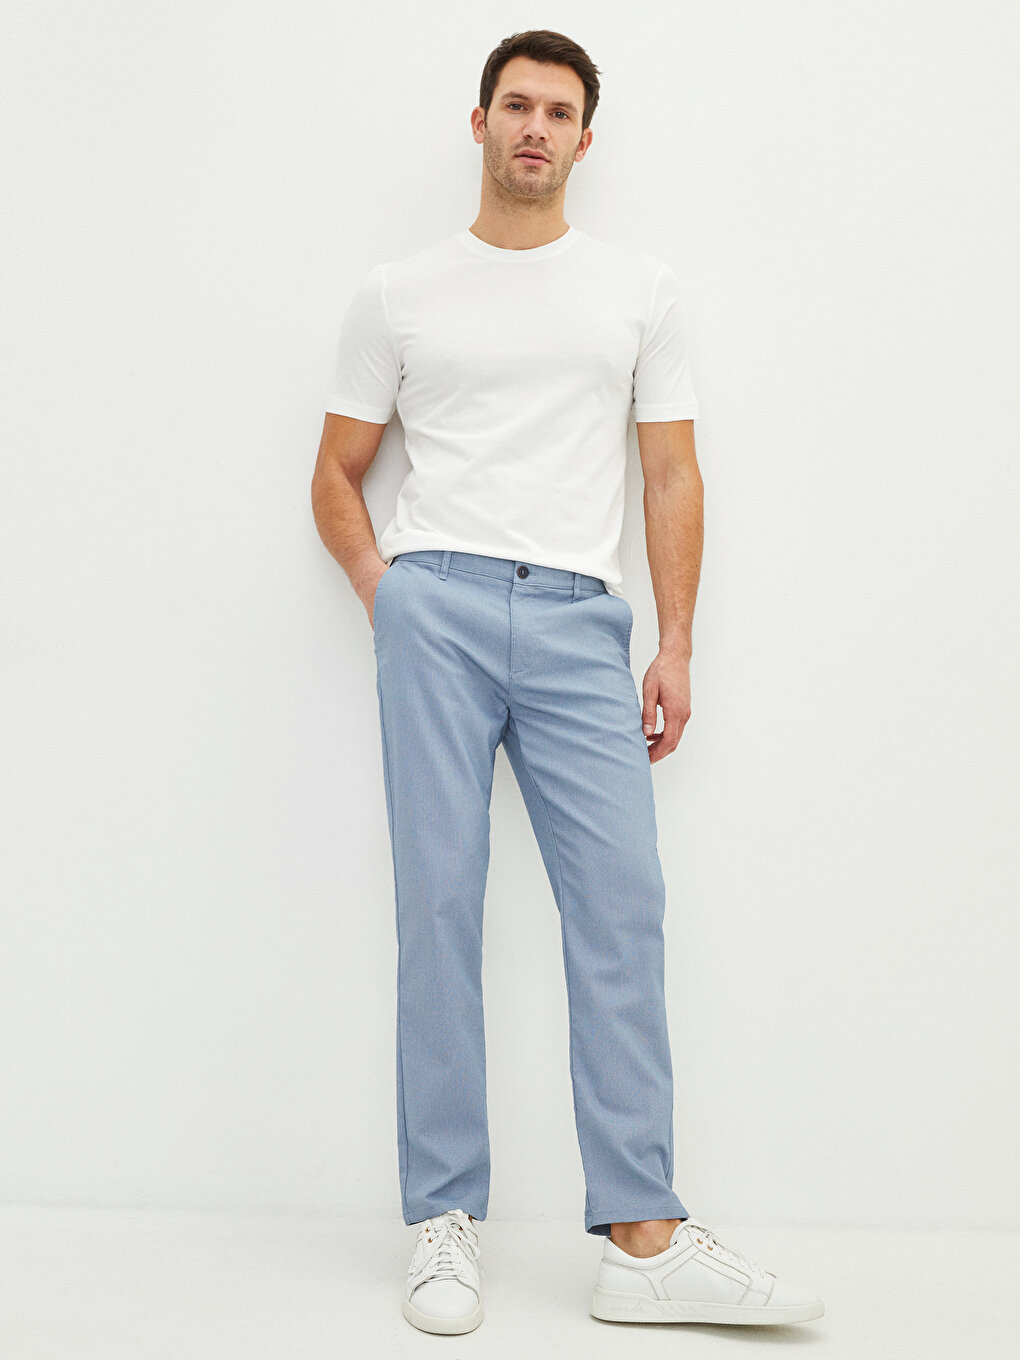 25 Men's Fashion Sky Blue Pants ideas | blue pants, mens fashion, fashion